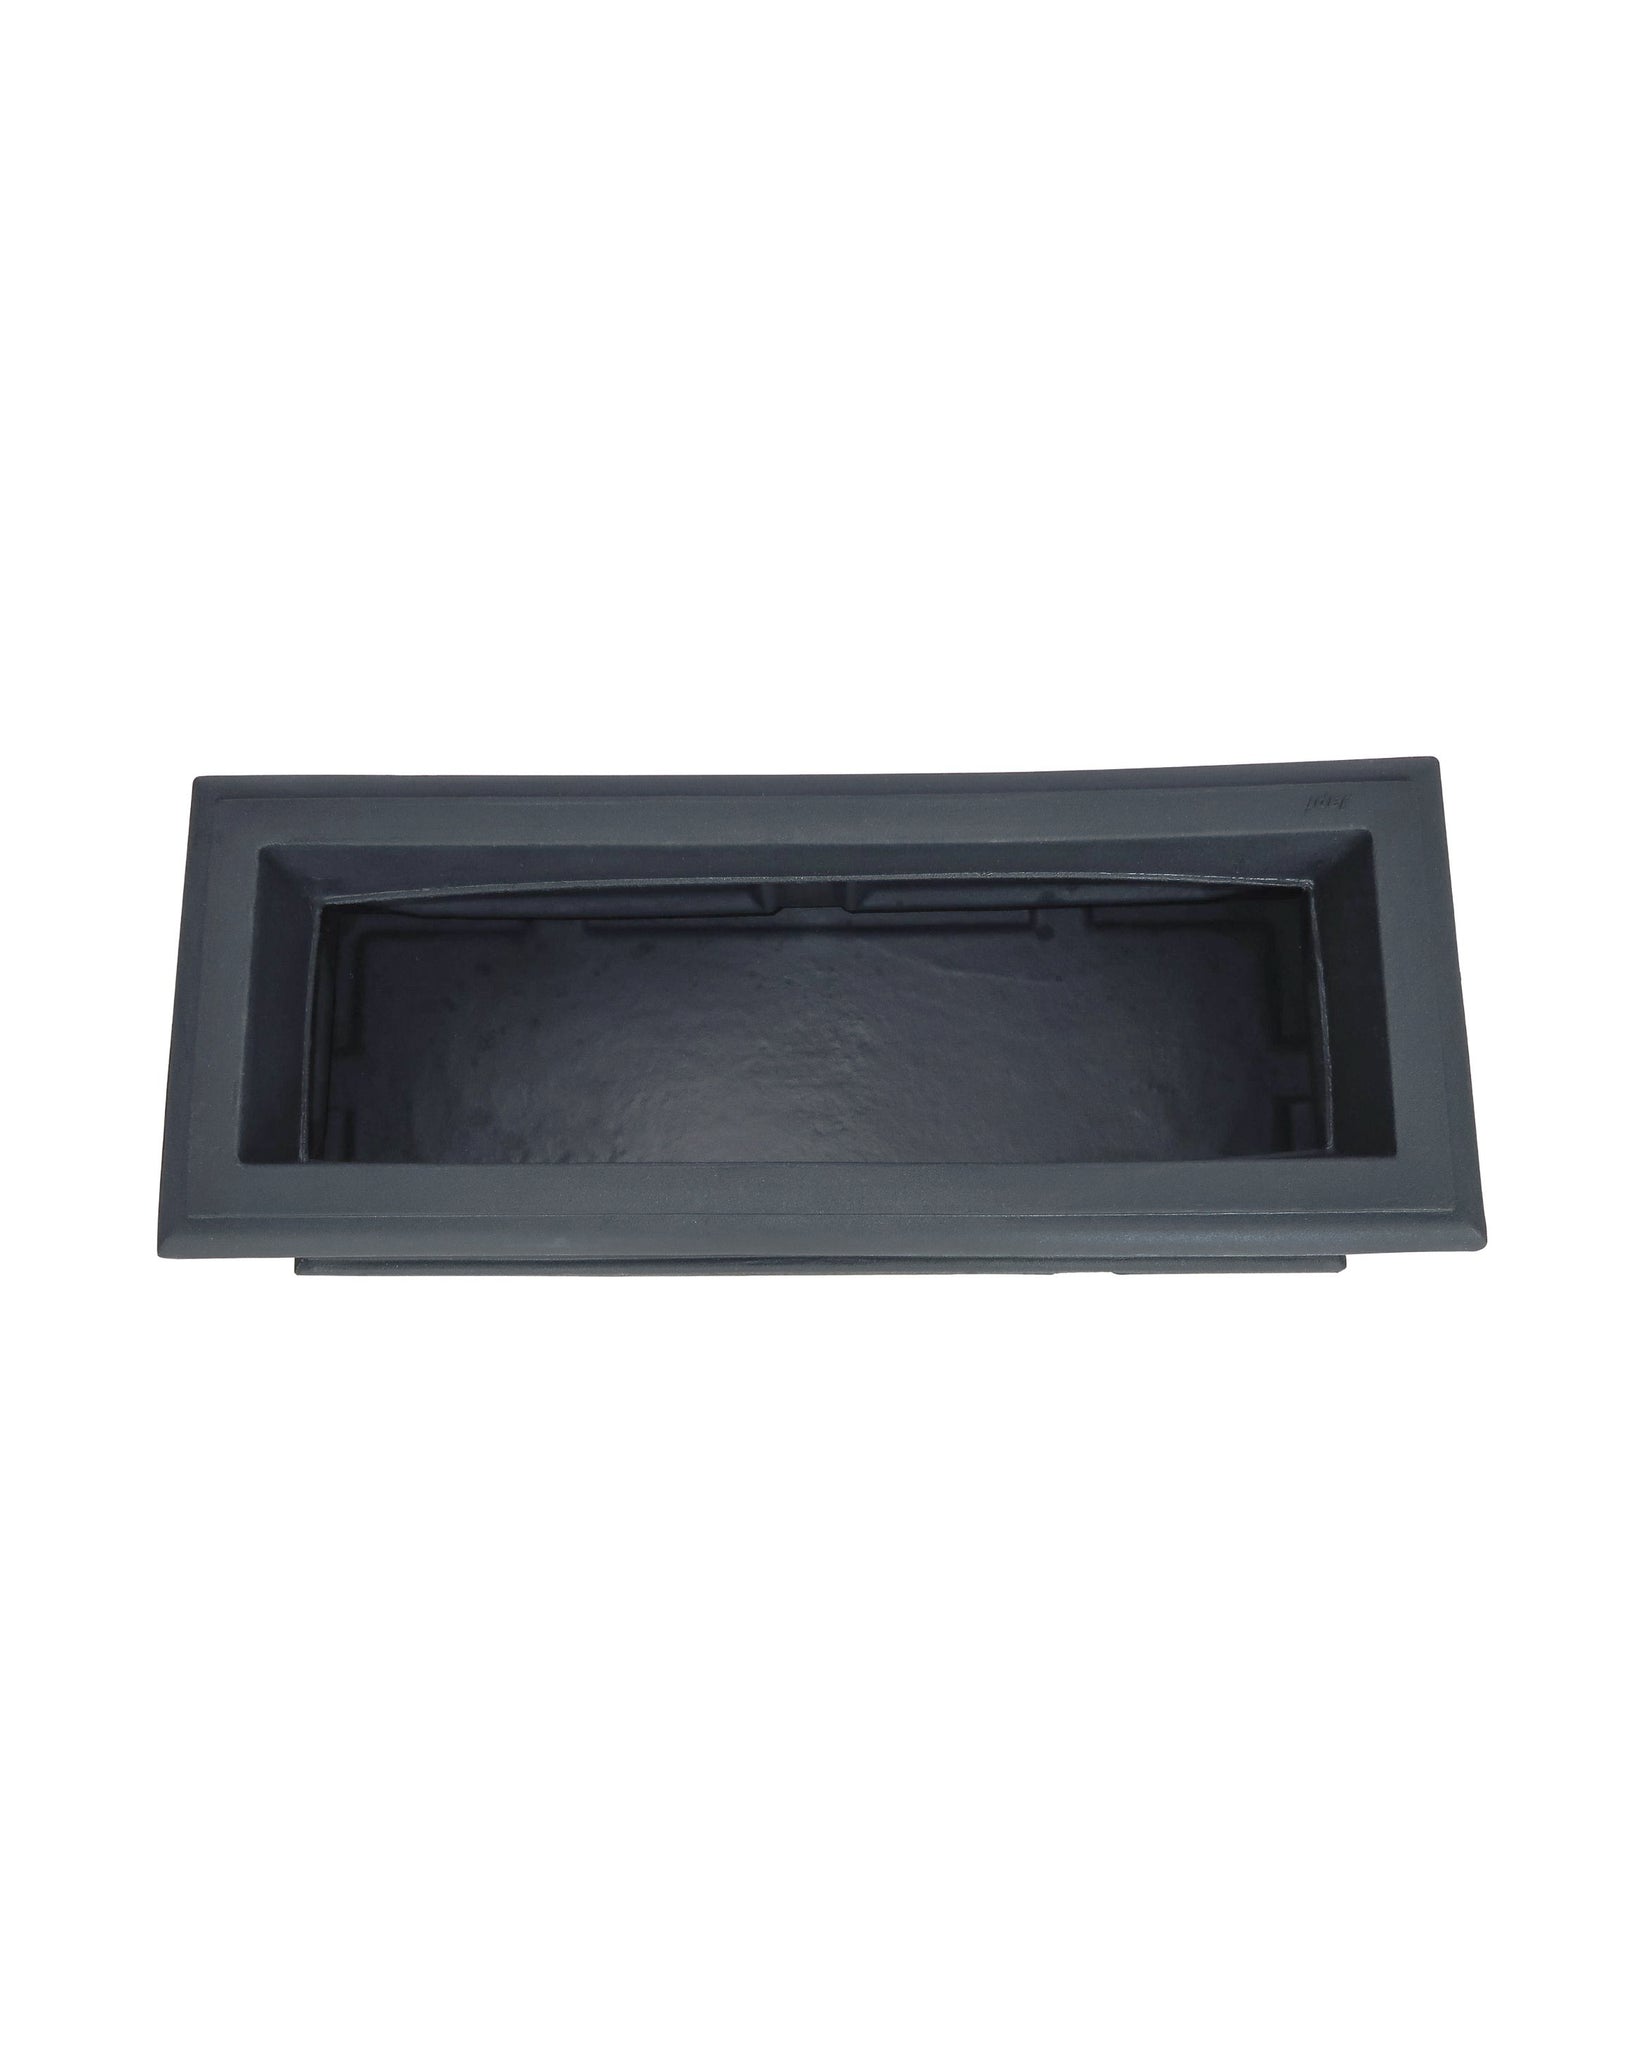 Classic versailles japi window box aerial view. rectangular and spacious. Colour lead (black)